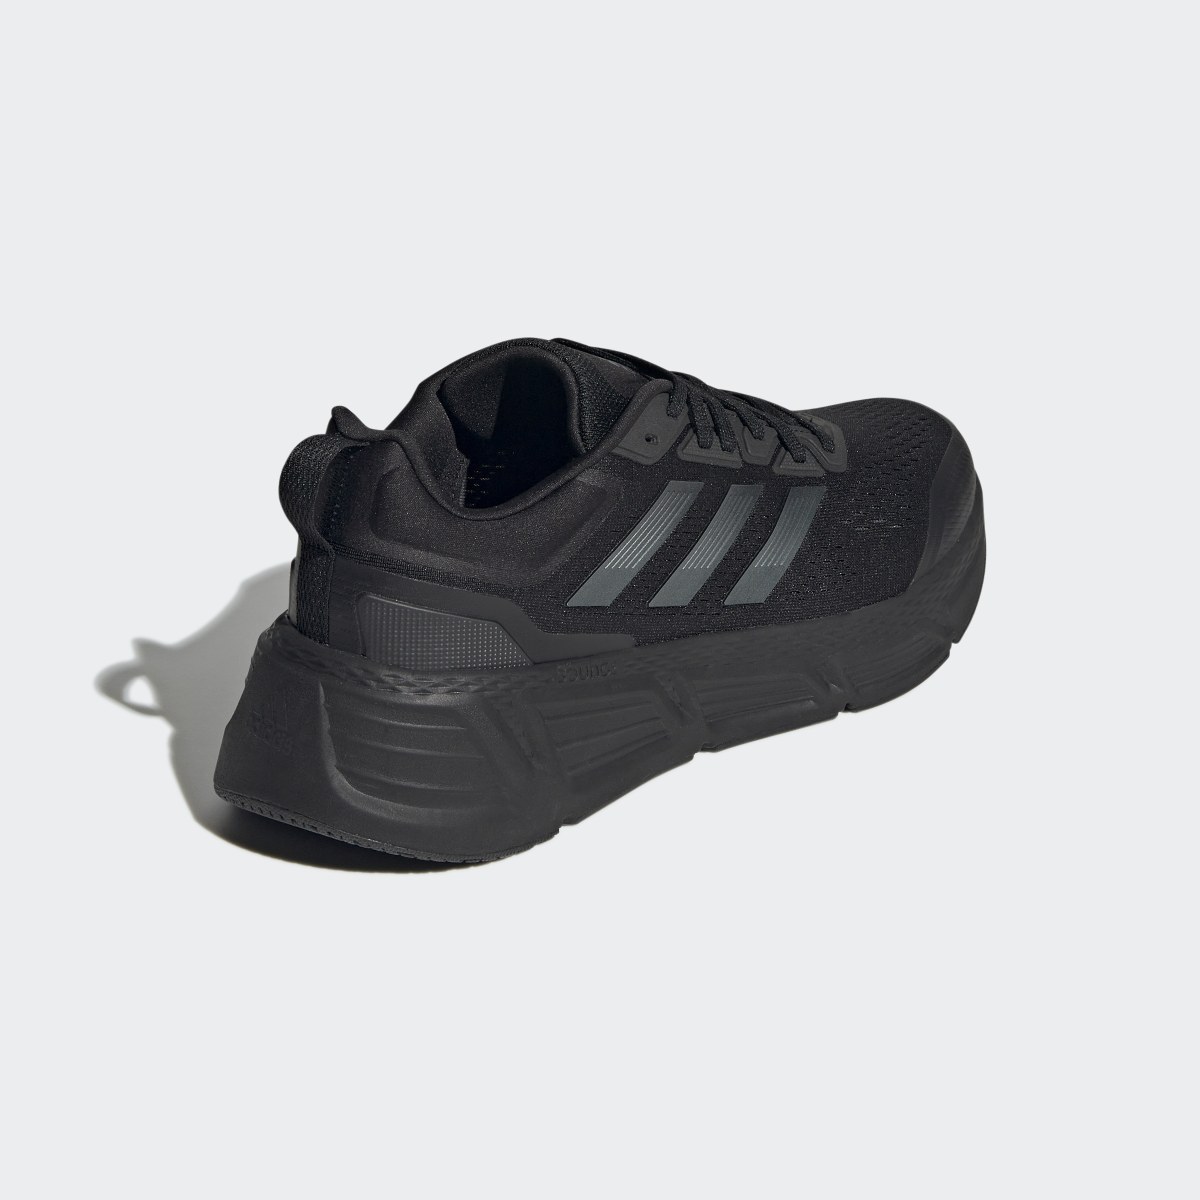 Adidas Questar Running Shoes. 6